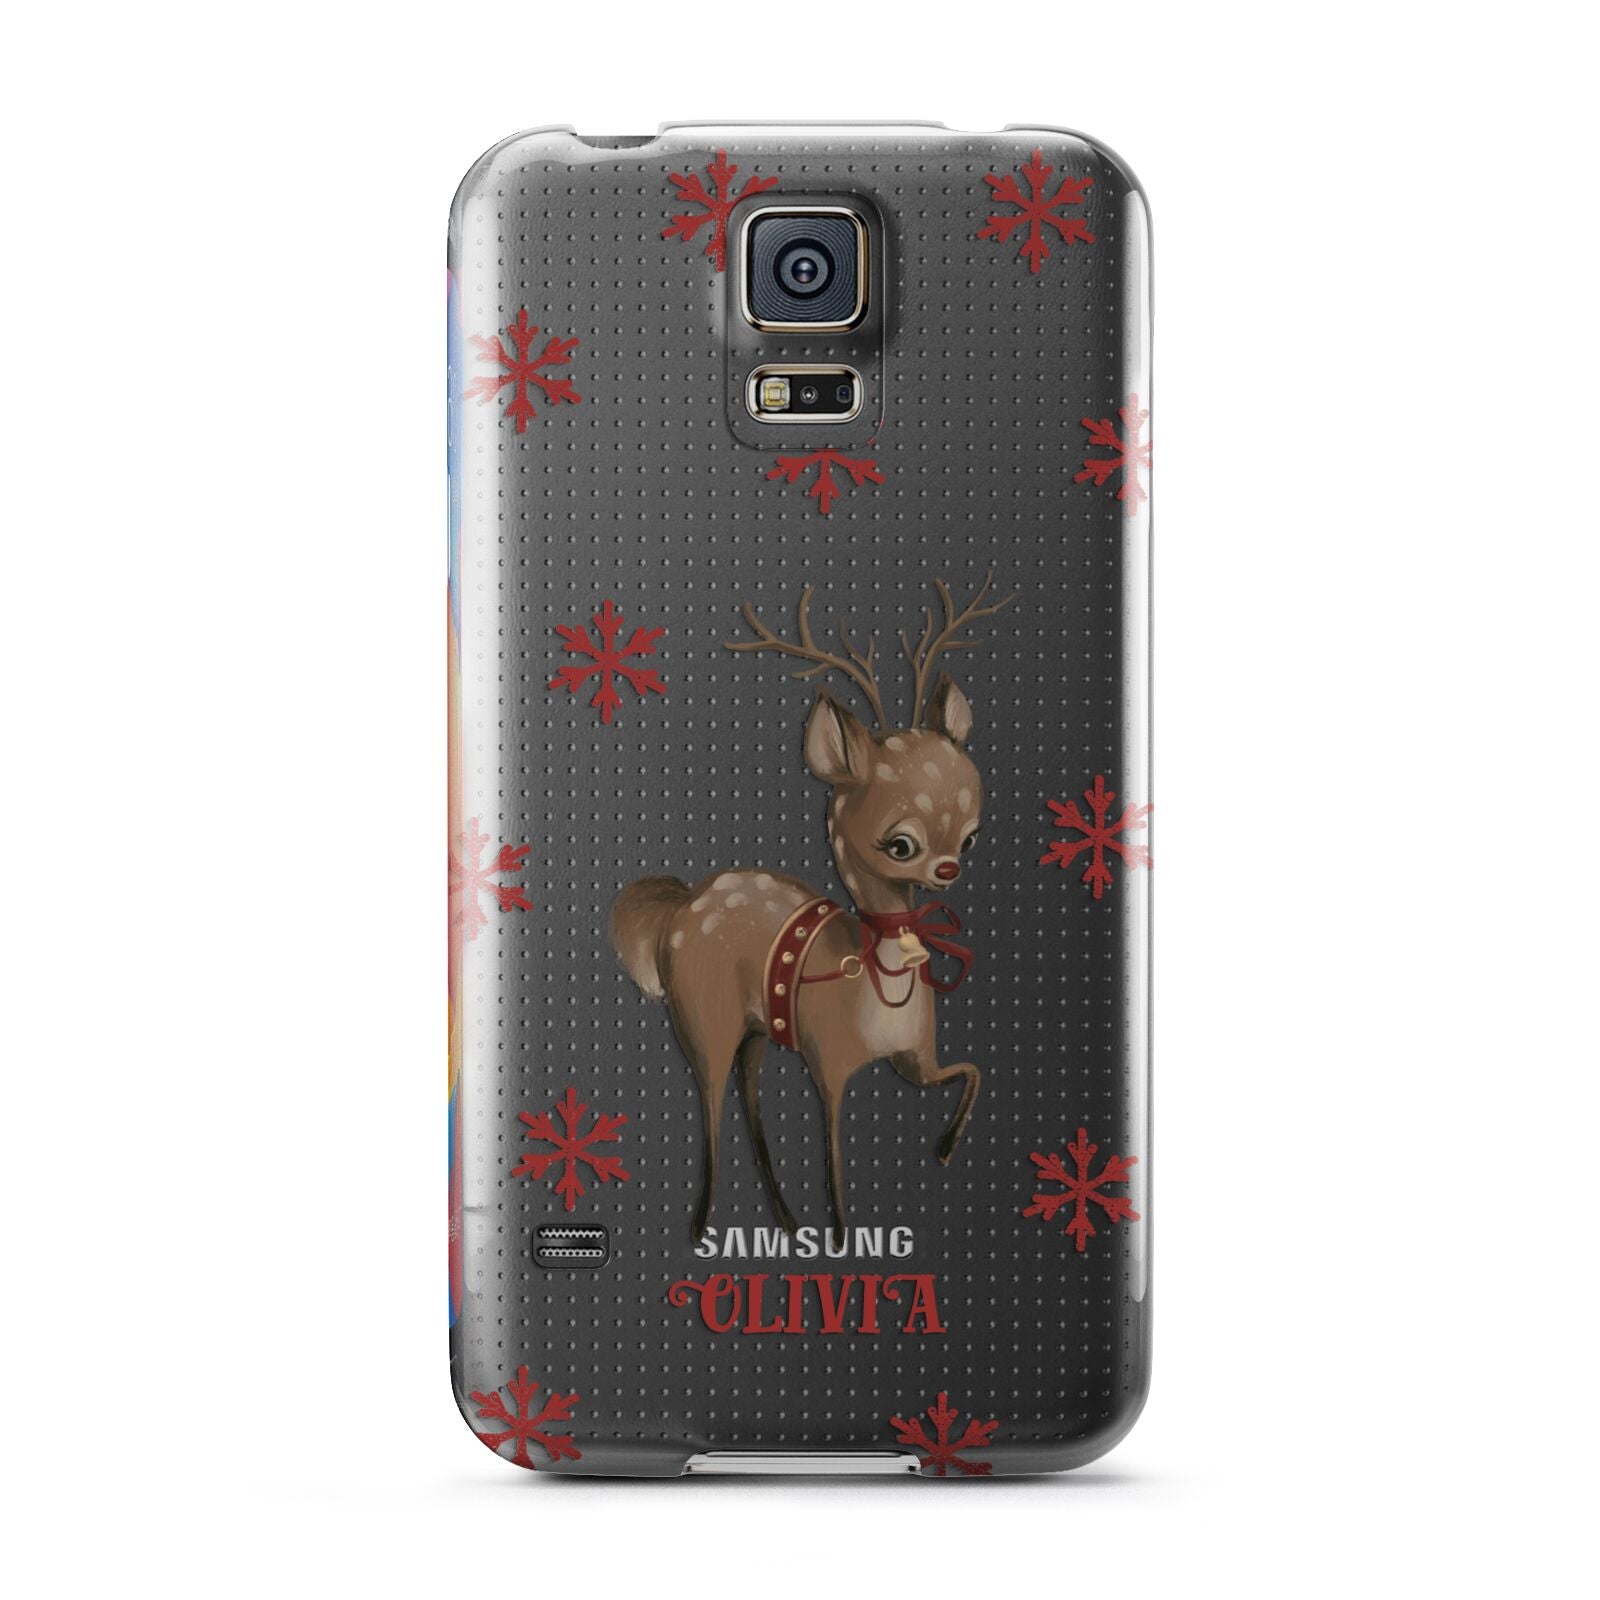 Rudolph Delivery Samsung Galaxy S5 Case